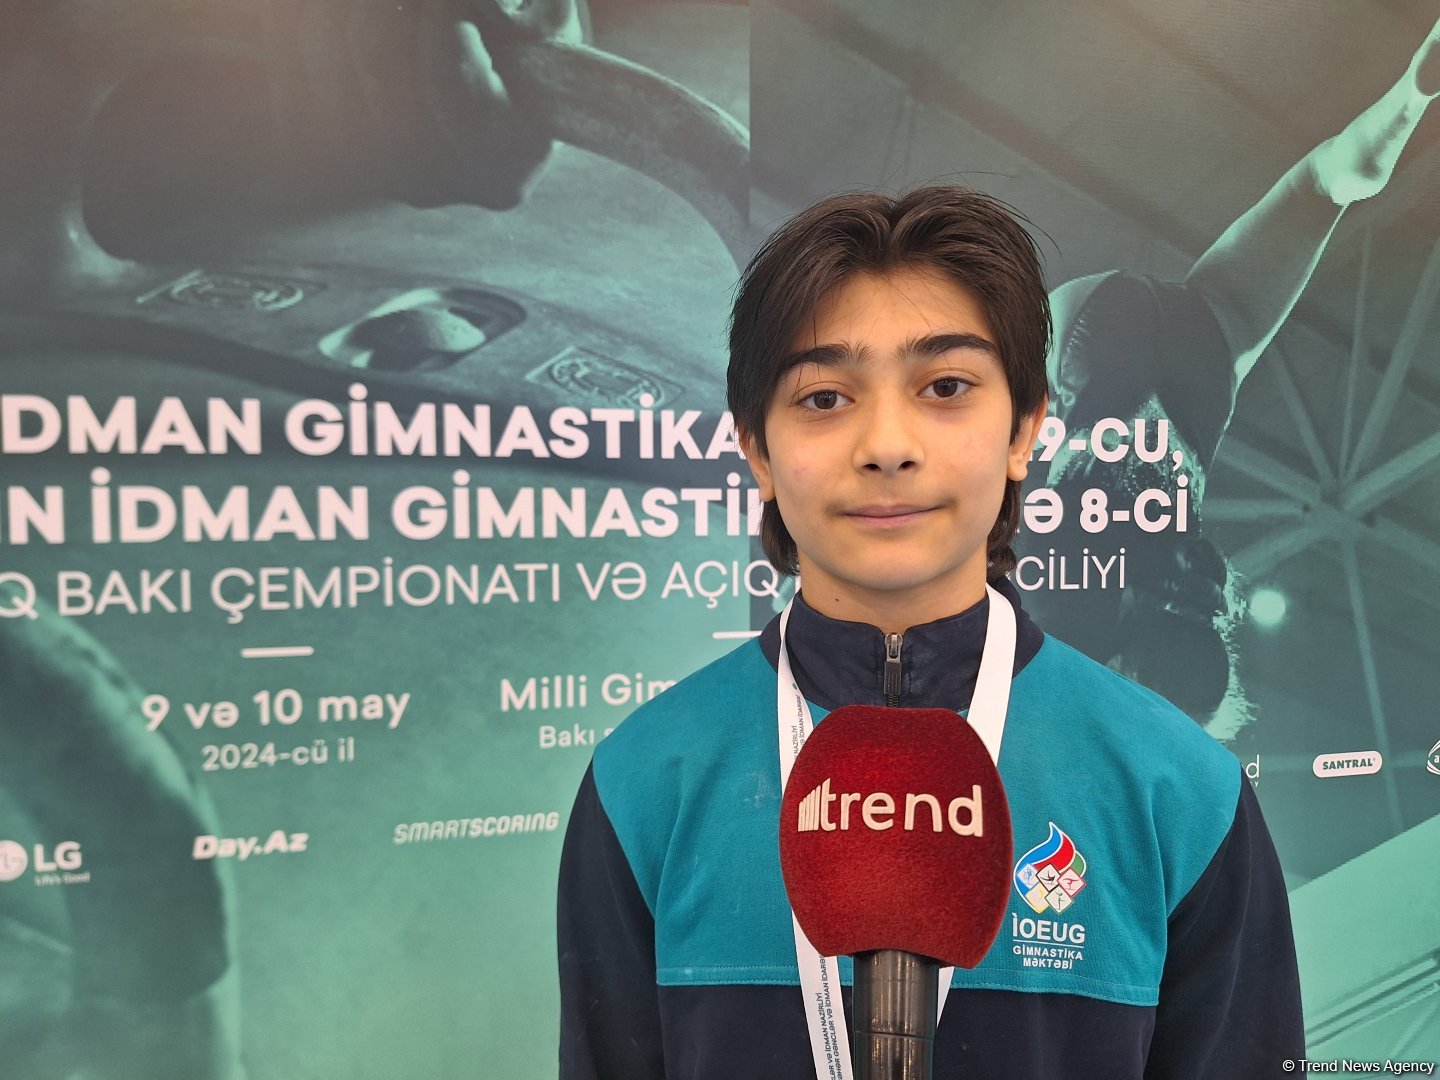 Open Baku Championship competitors turned out formidable - Azerbaijani gymnast